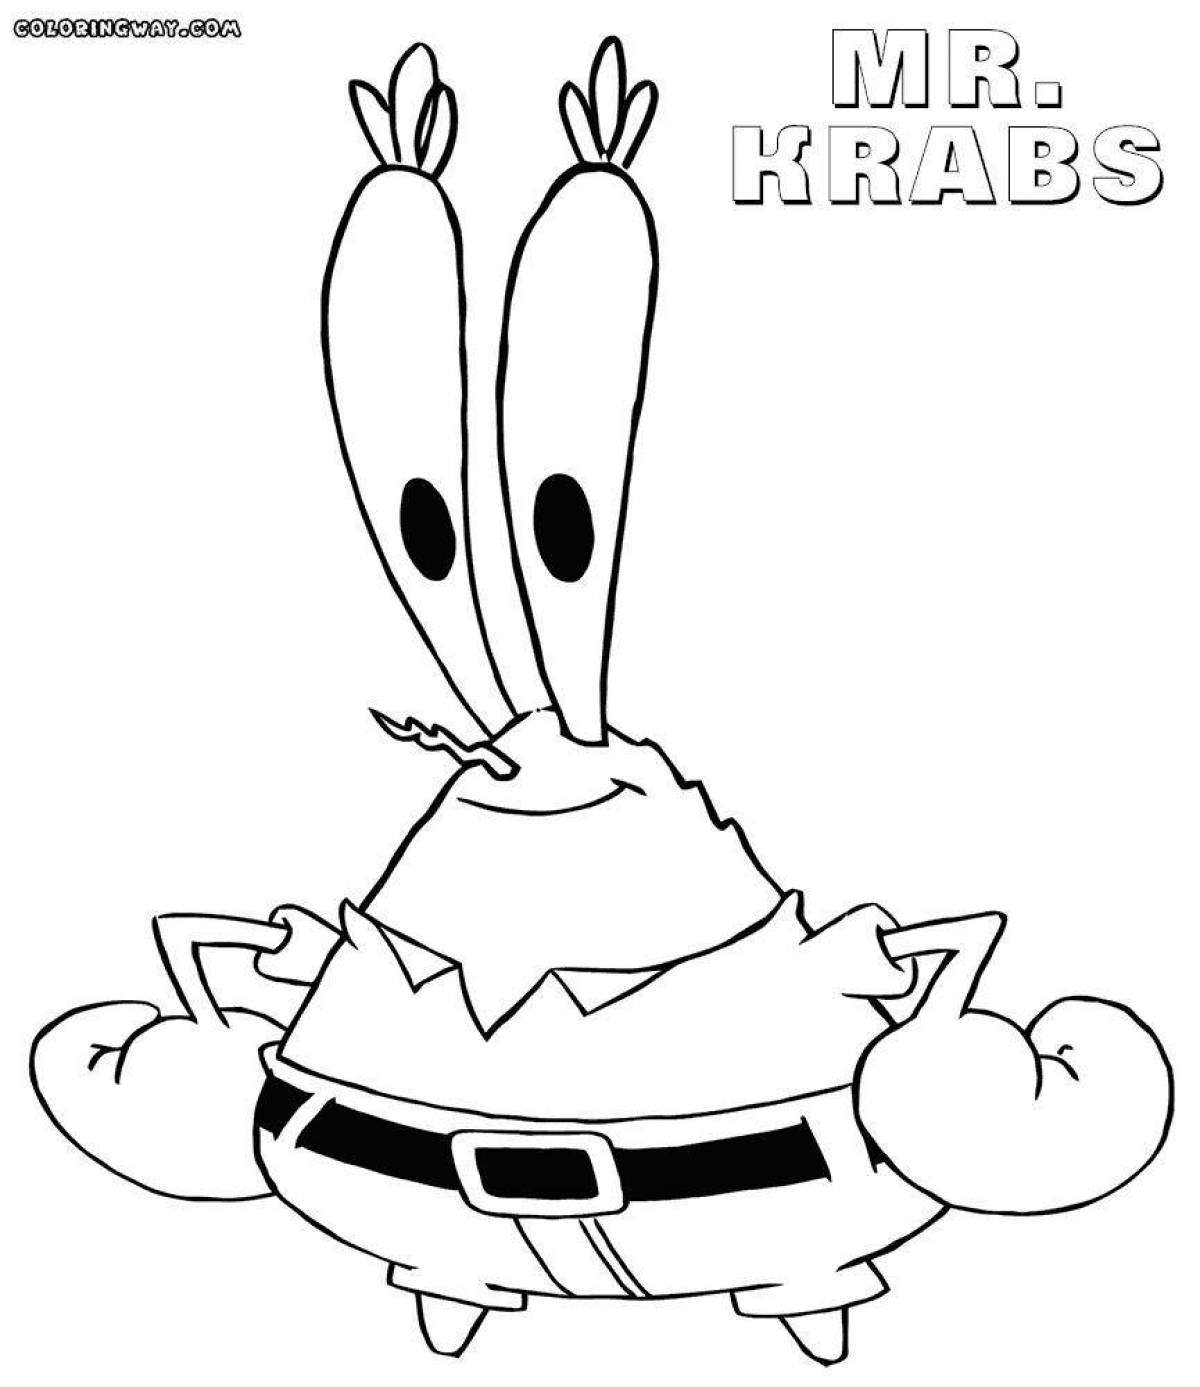 Mr Krabs fun coloring book